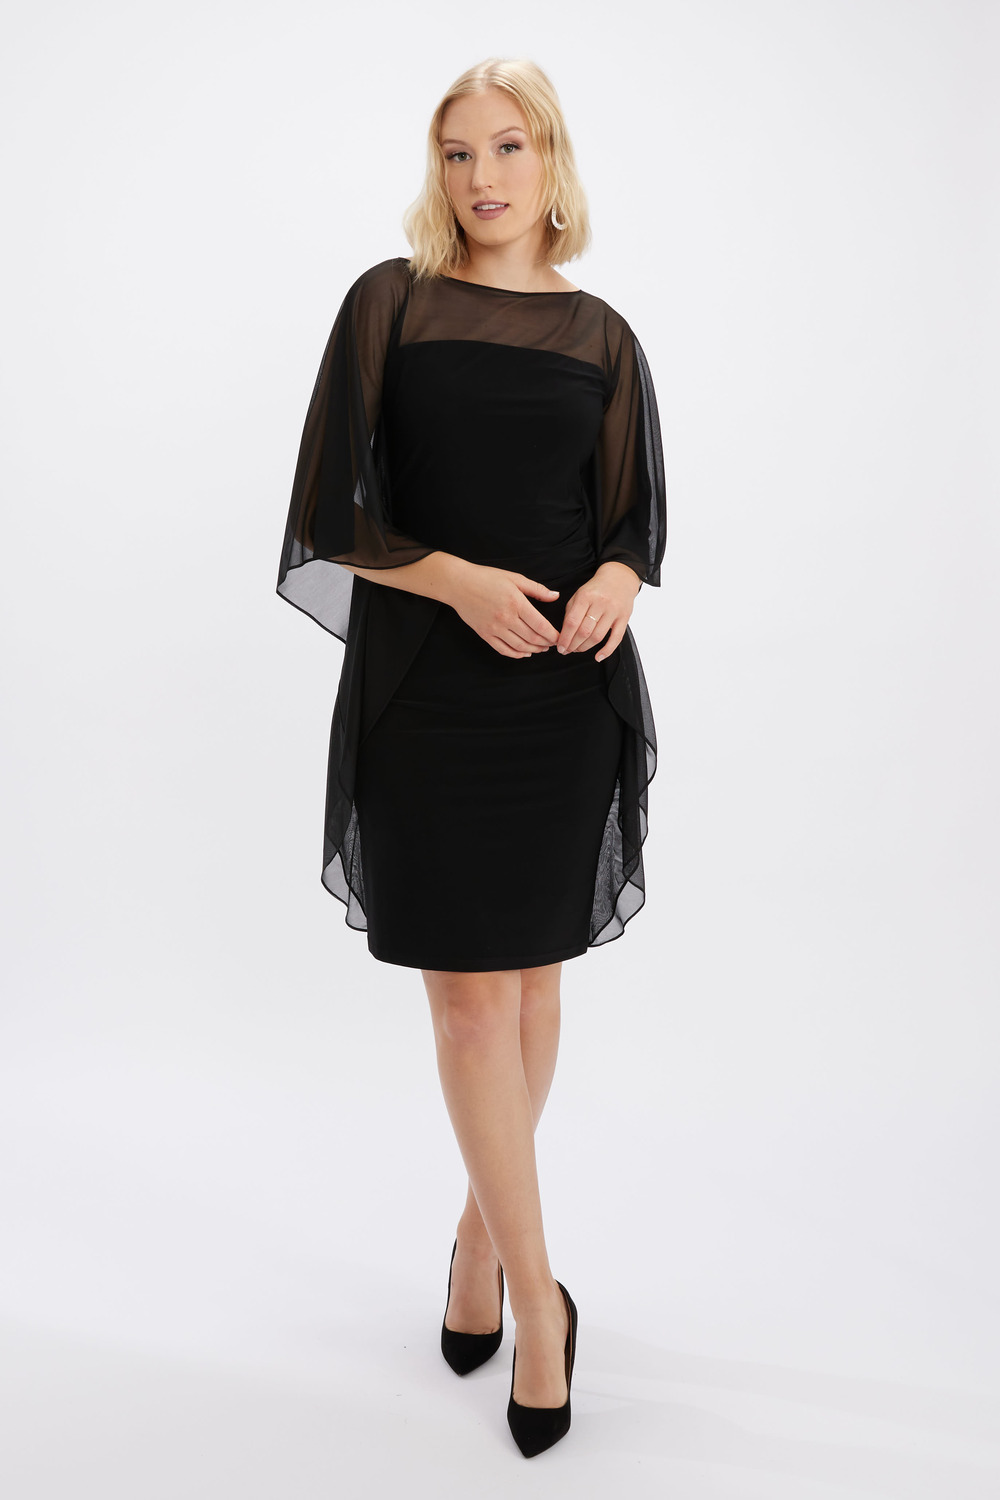 Mesh Batwing Dress Style 234037. Black